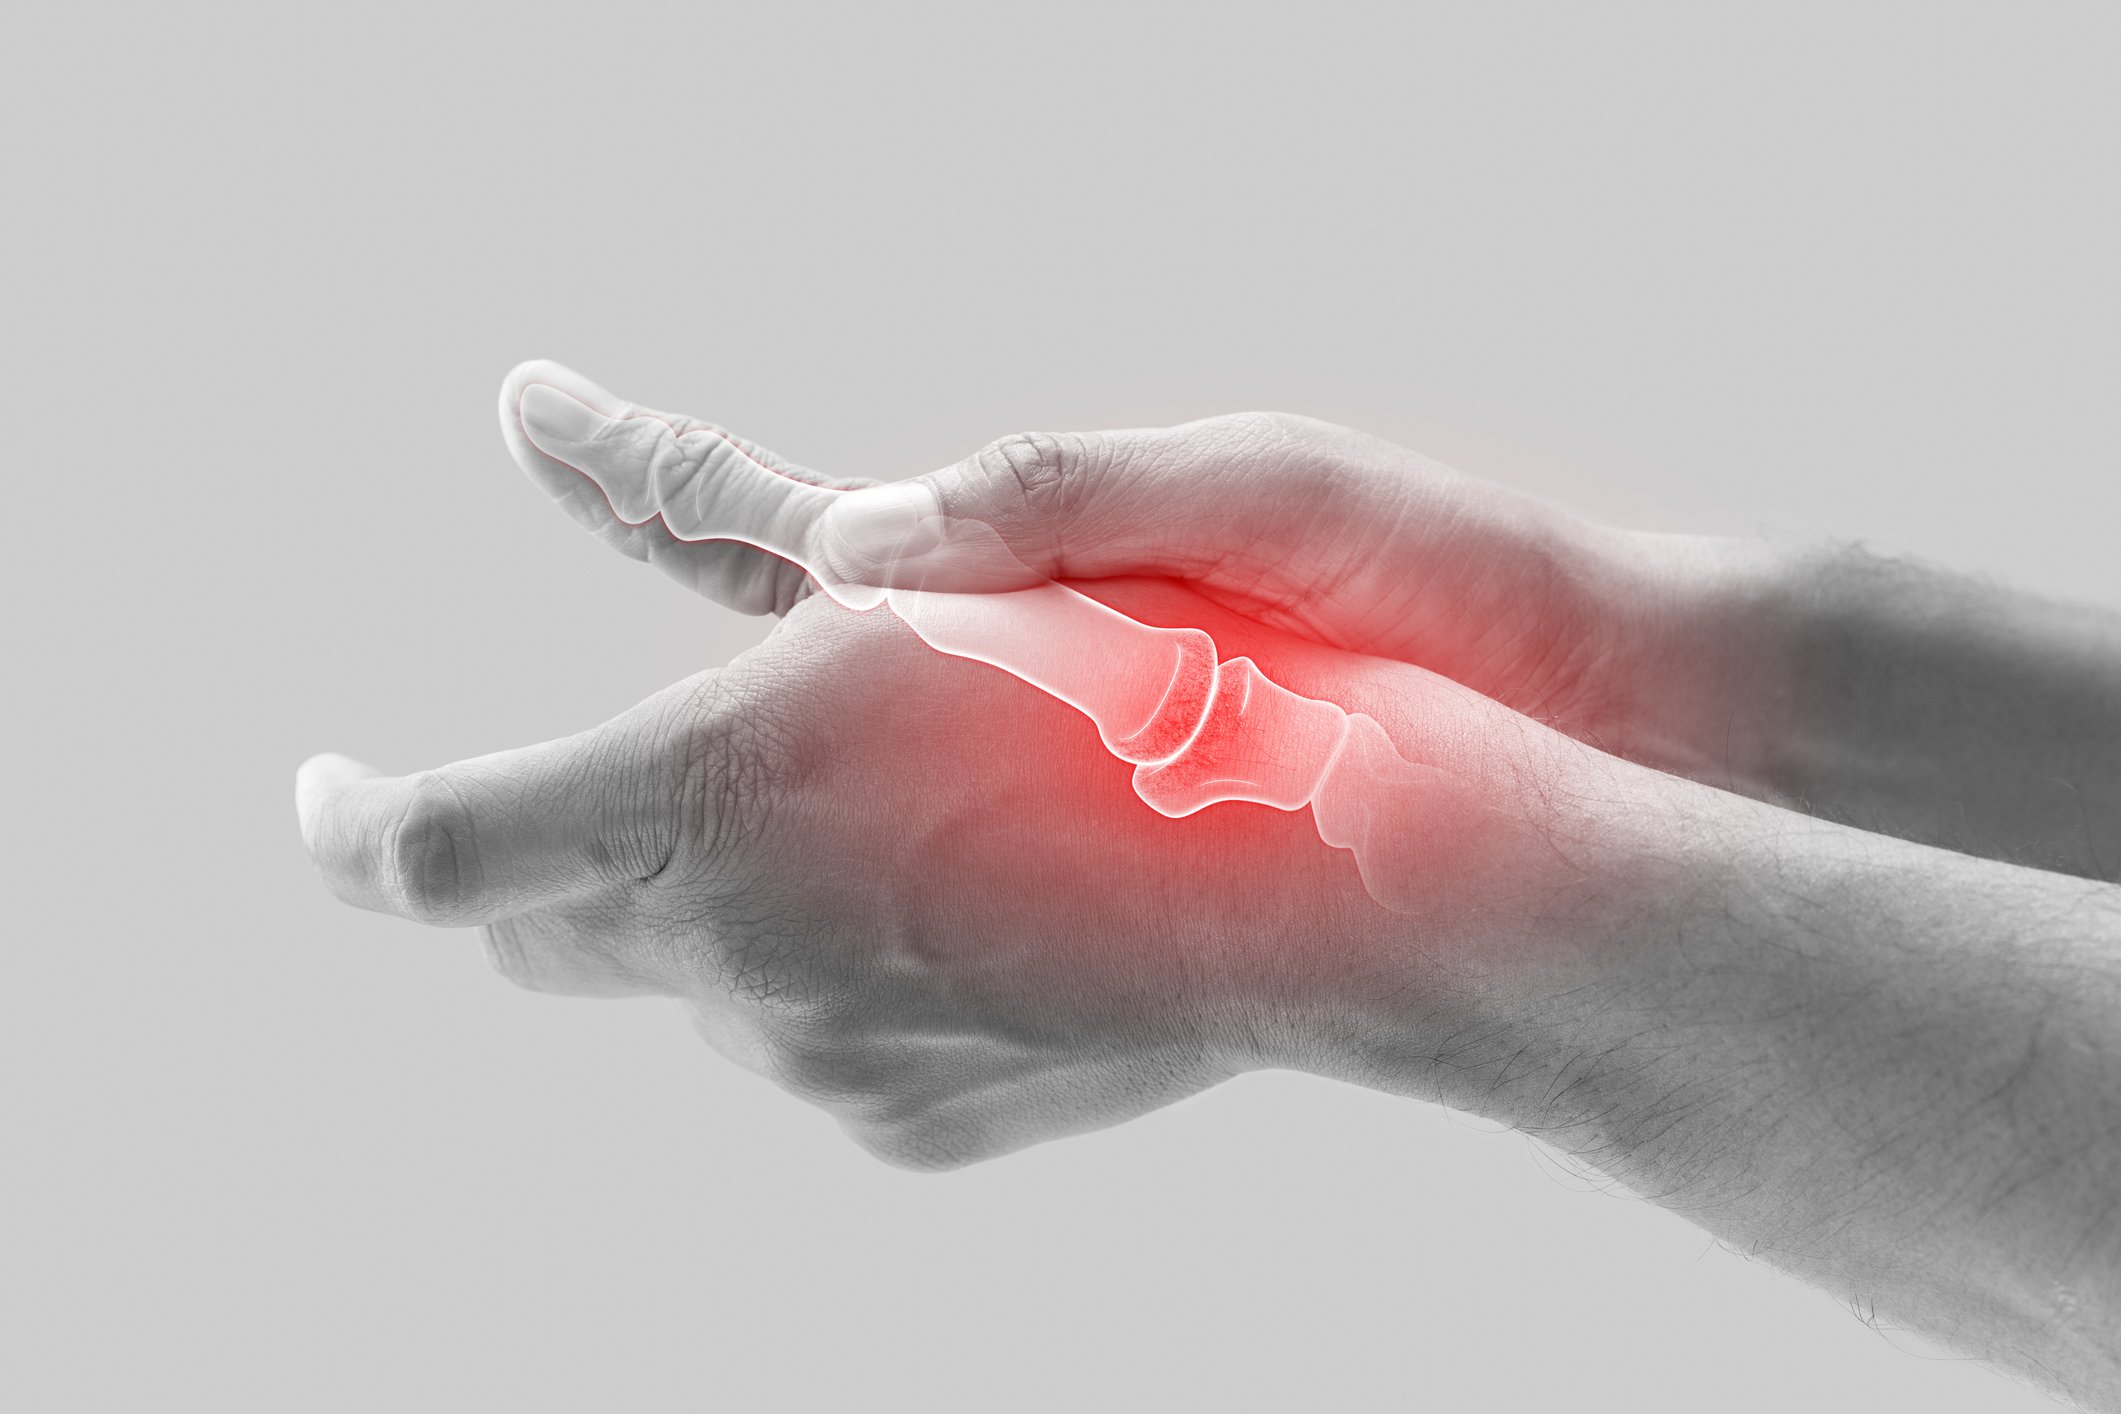 Osteoarthritis & Rheumatoid Arthritis: Role of Remote Care Management